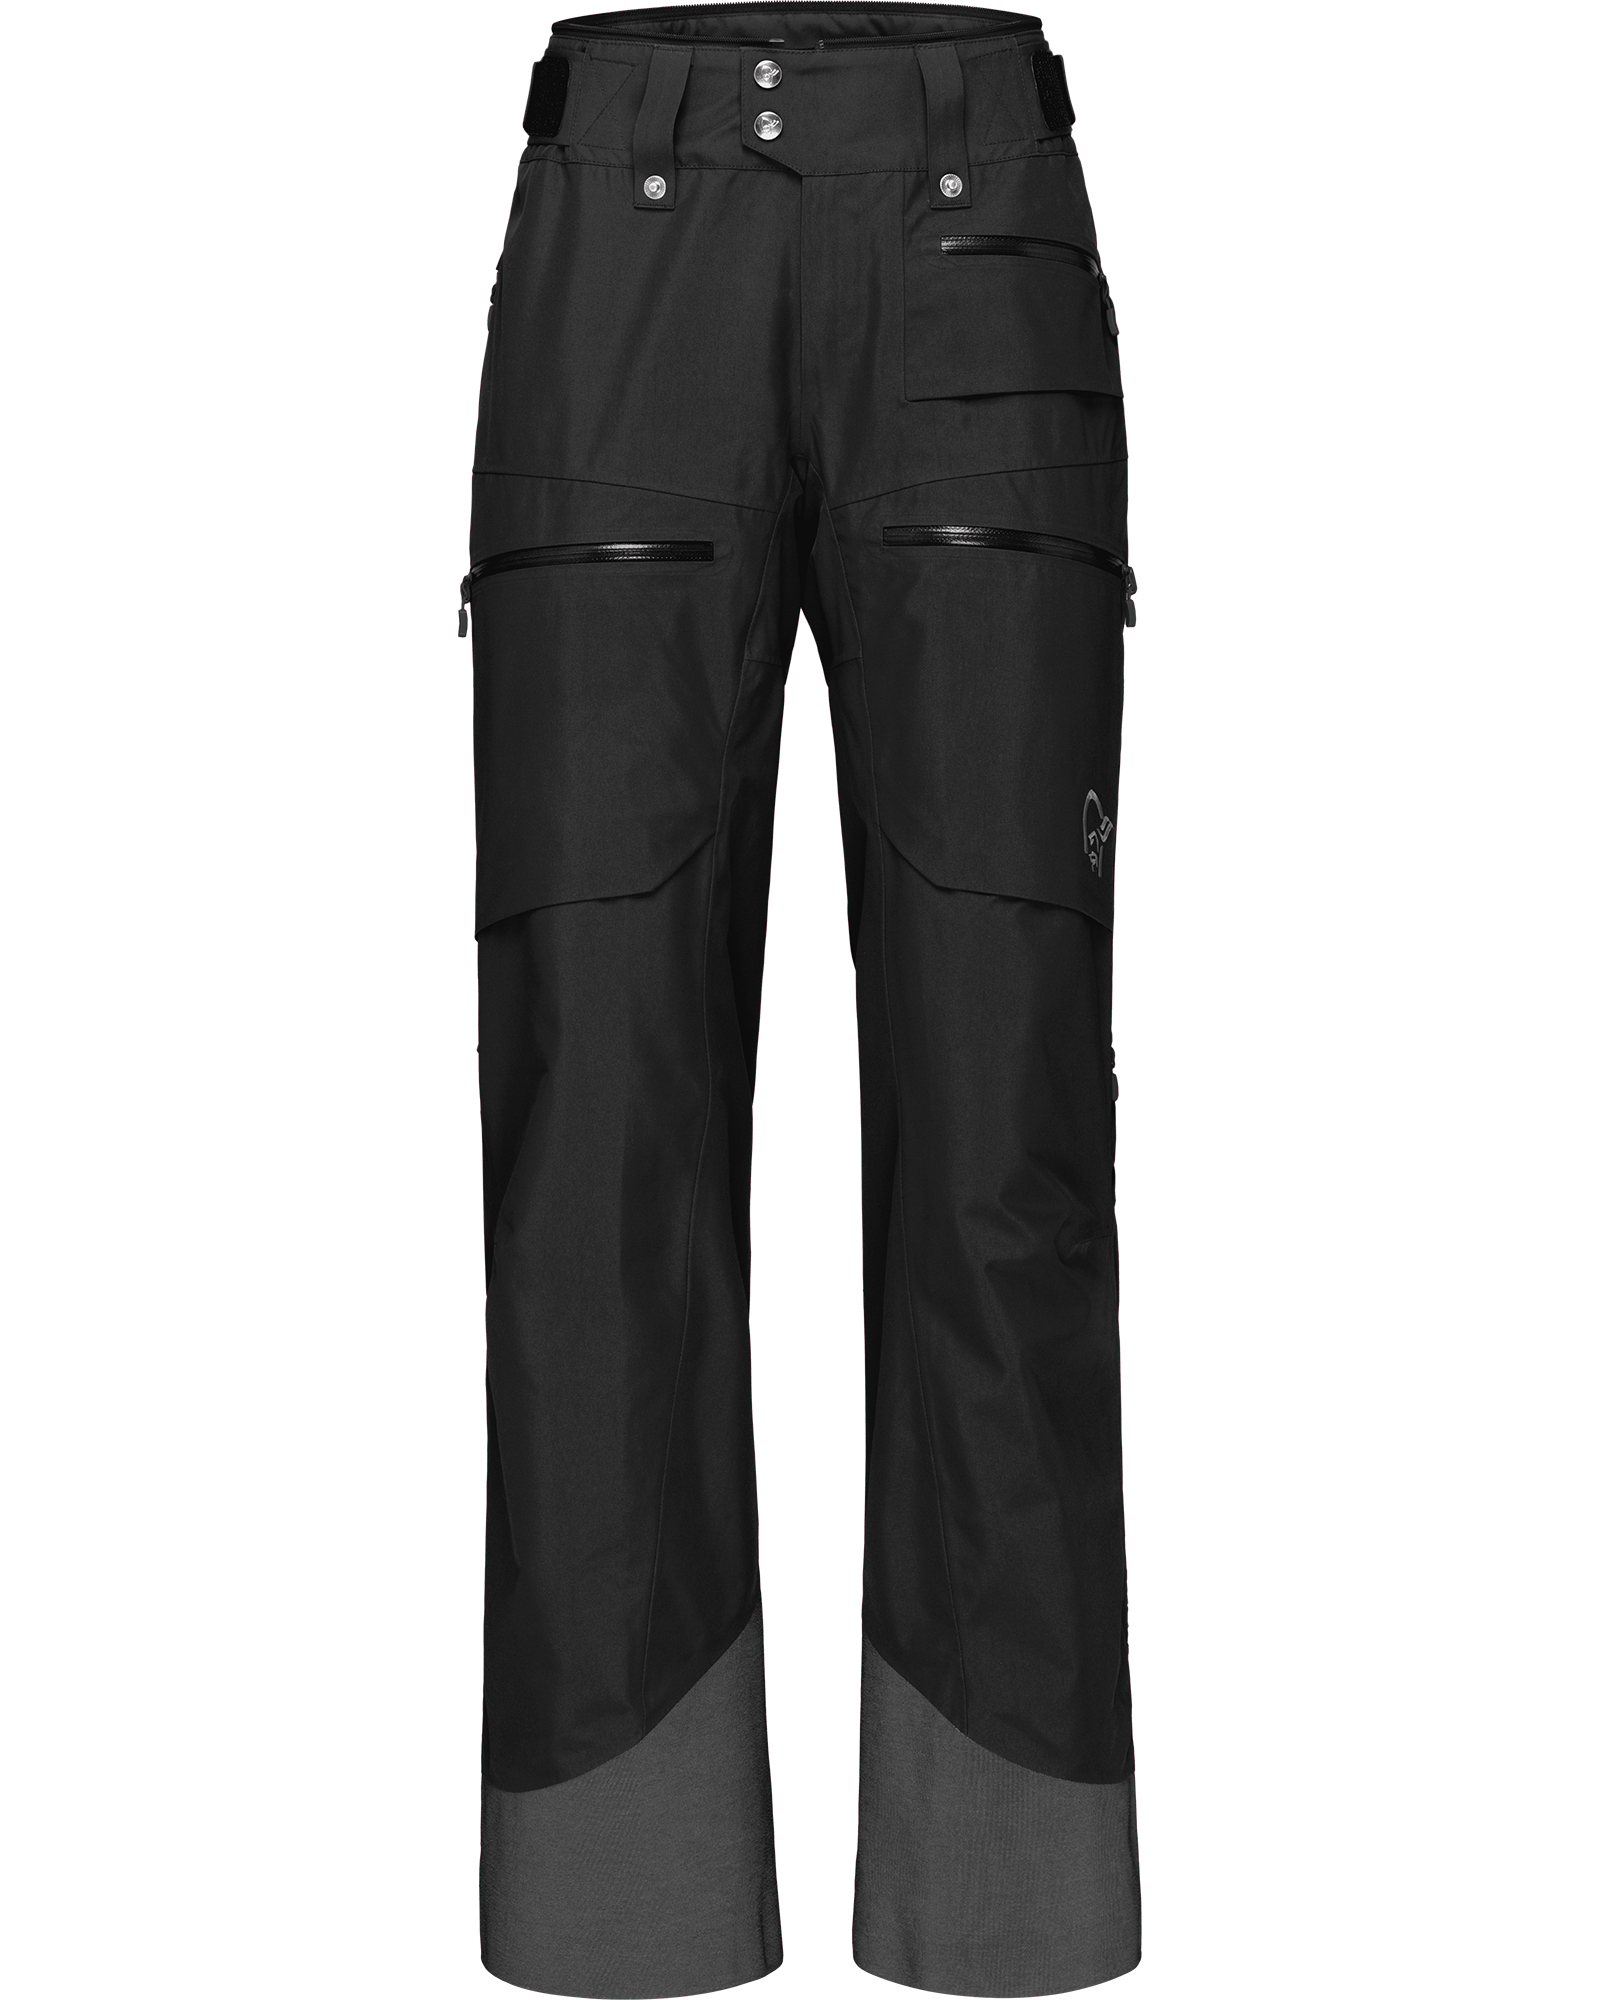 Norrona Lofoten GORE-TEX Insulated Women's Pants 0